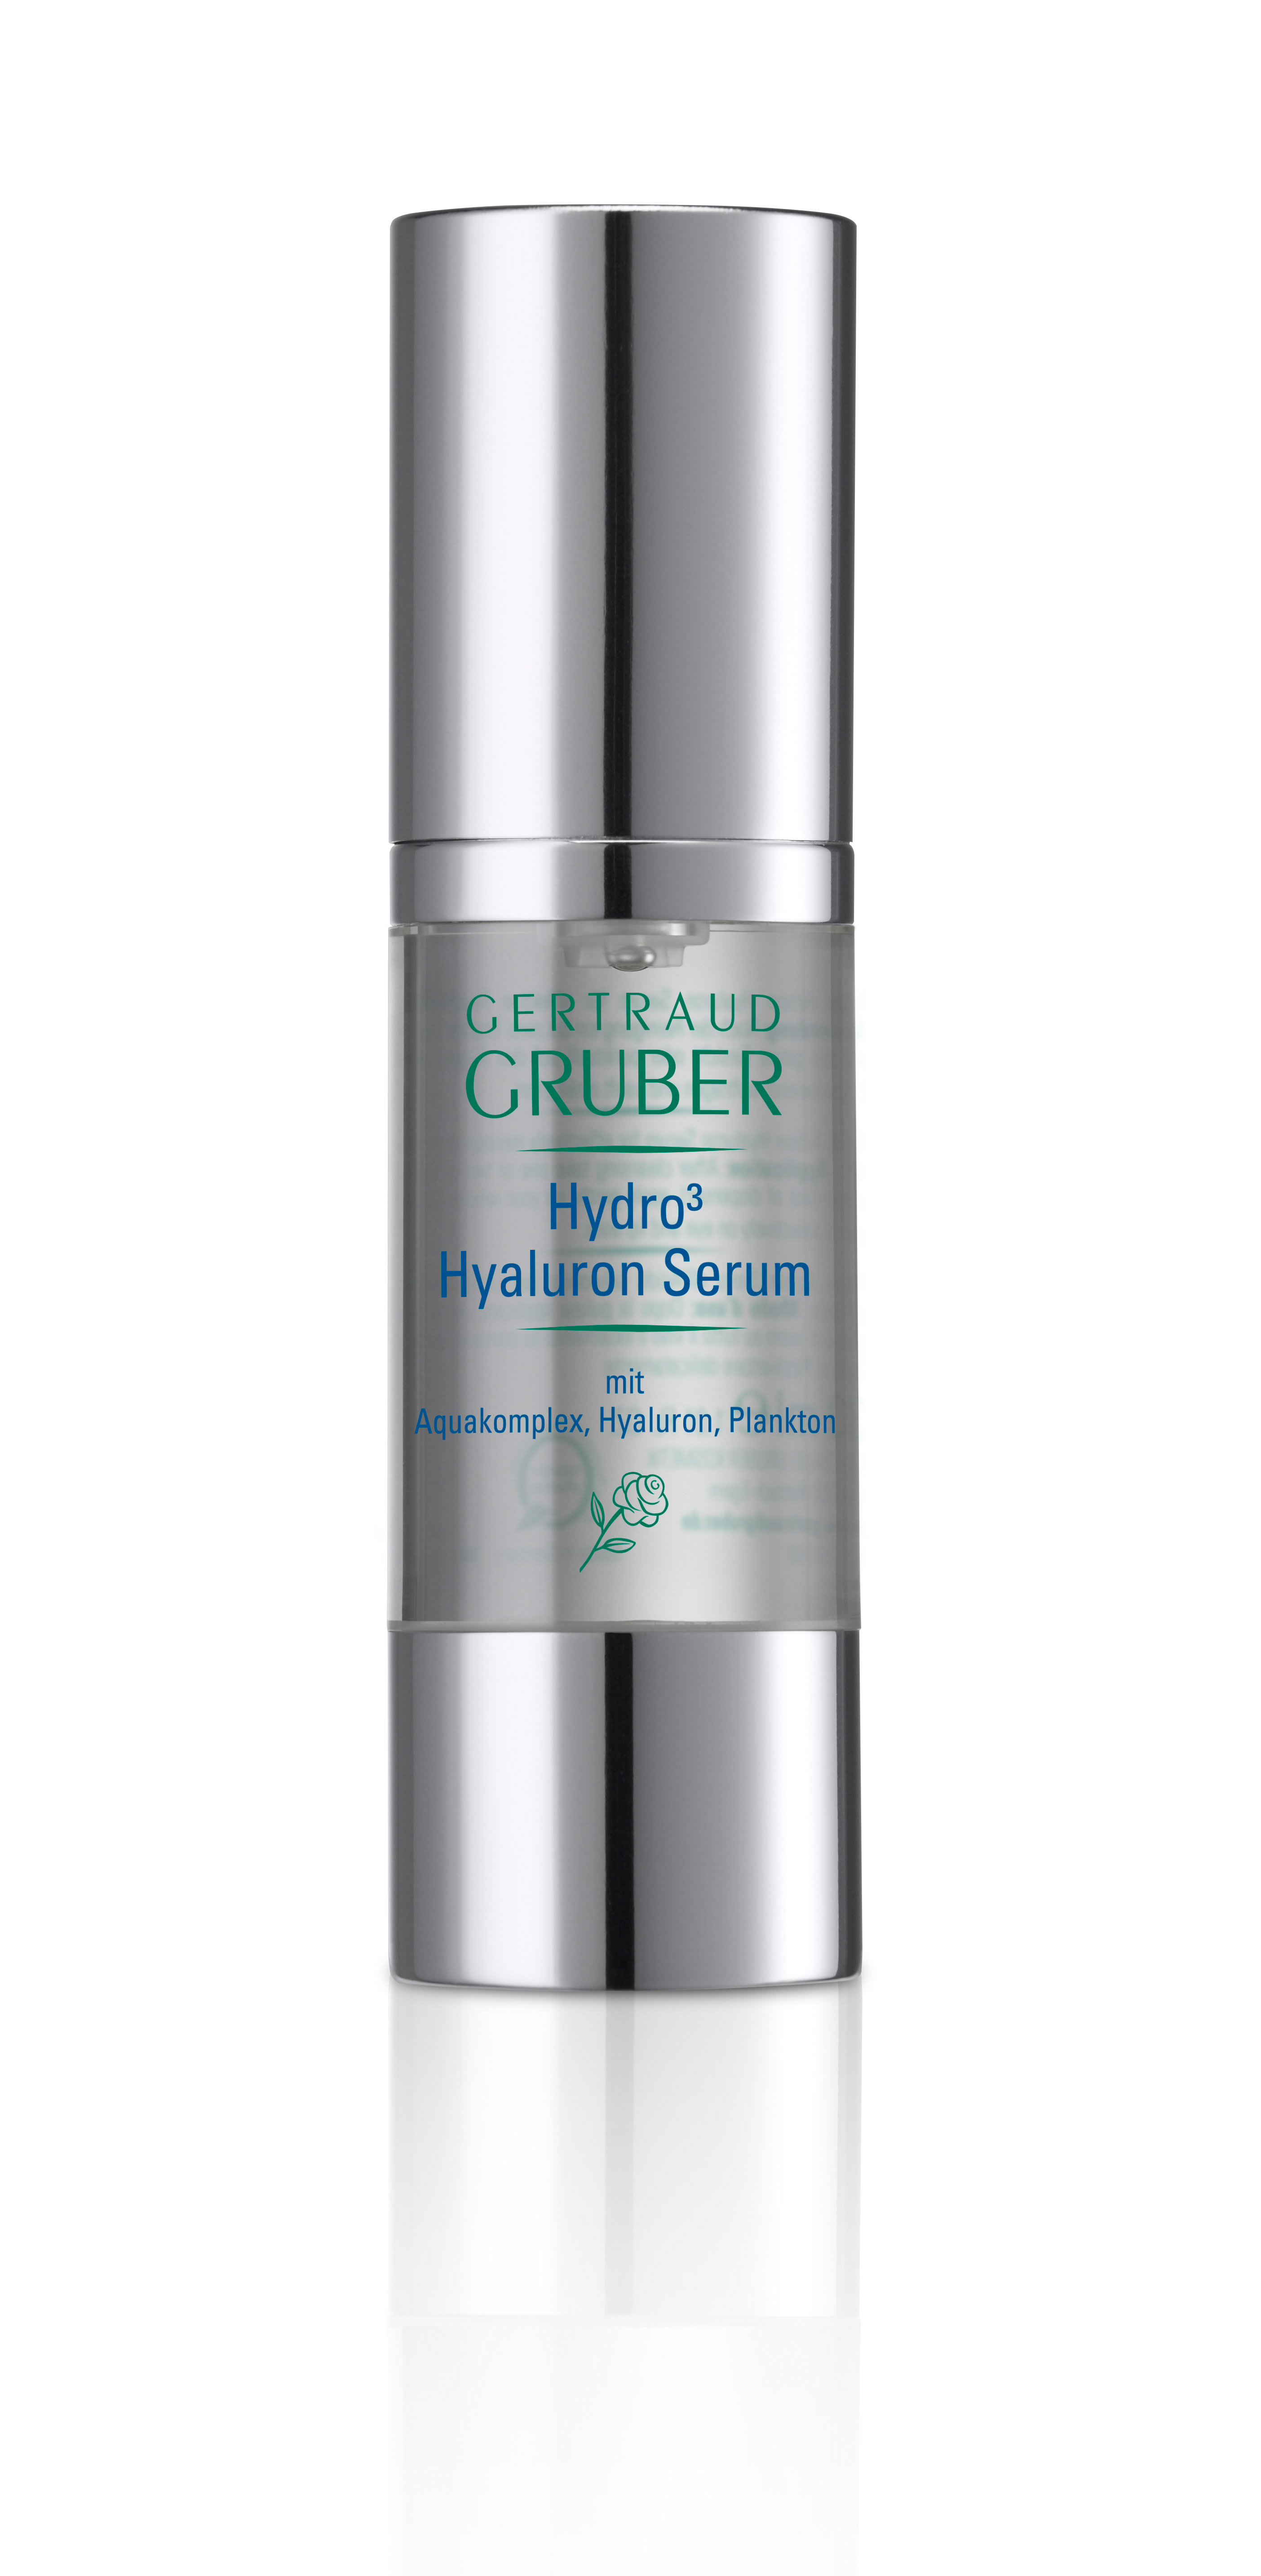 Gertraud Gruber Hydro 3 Hyaluron Serum